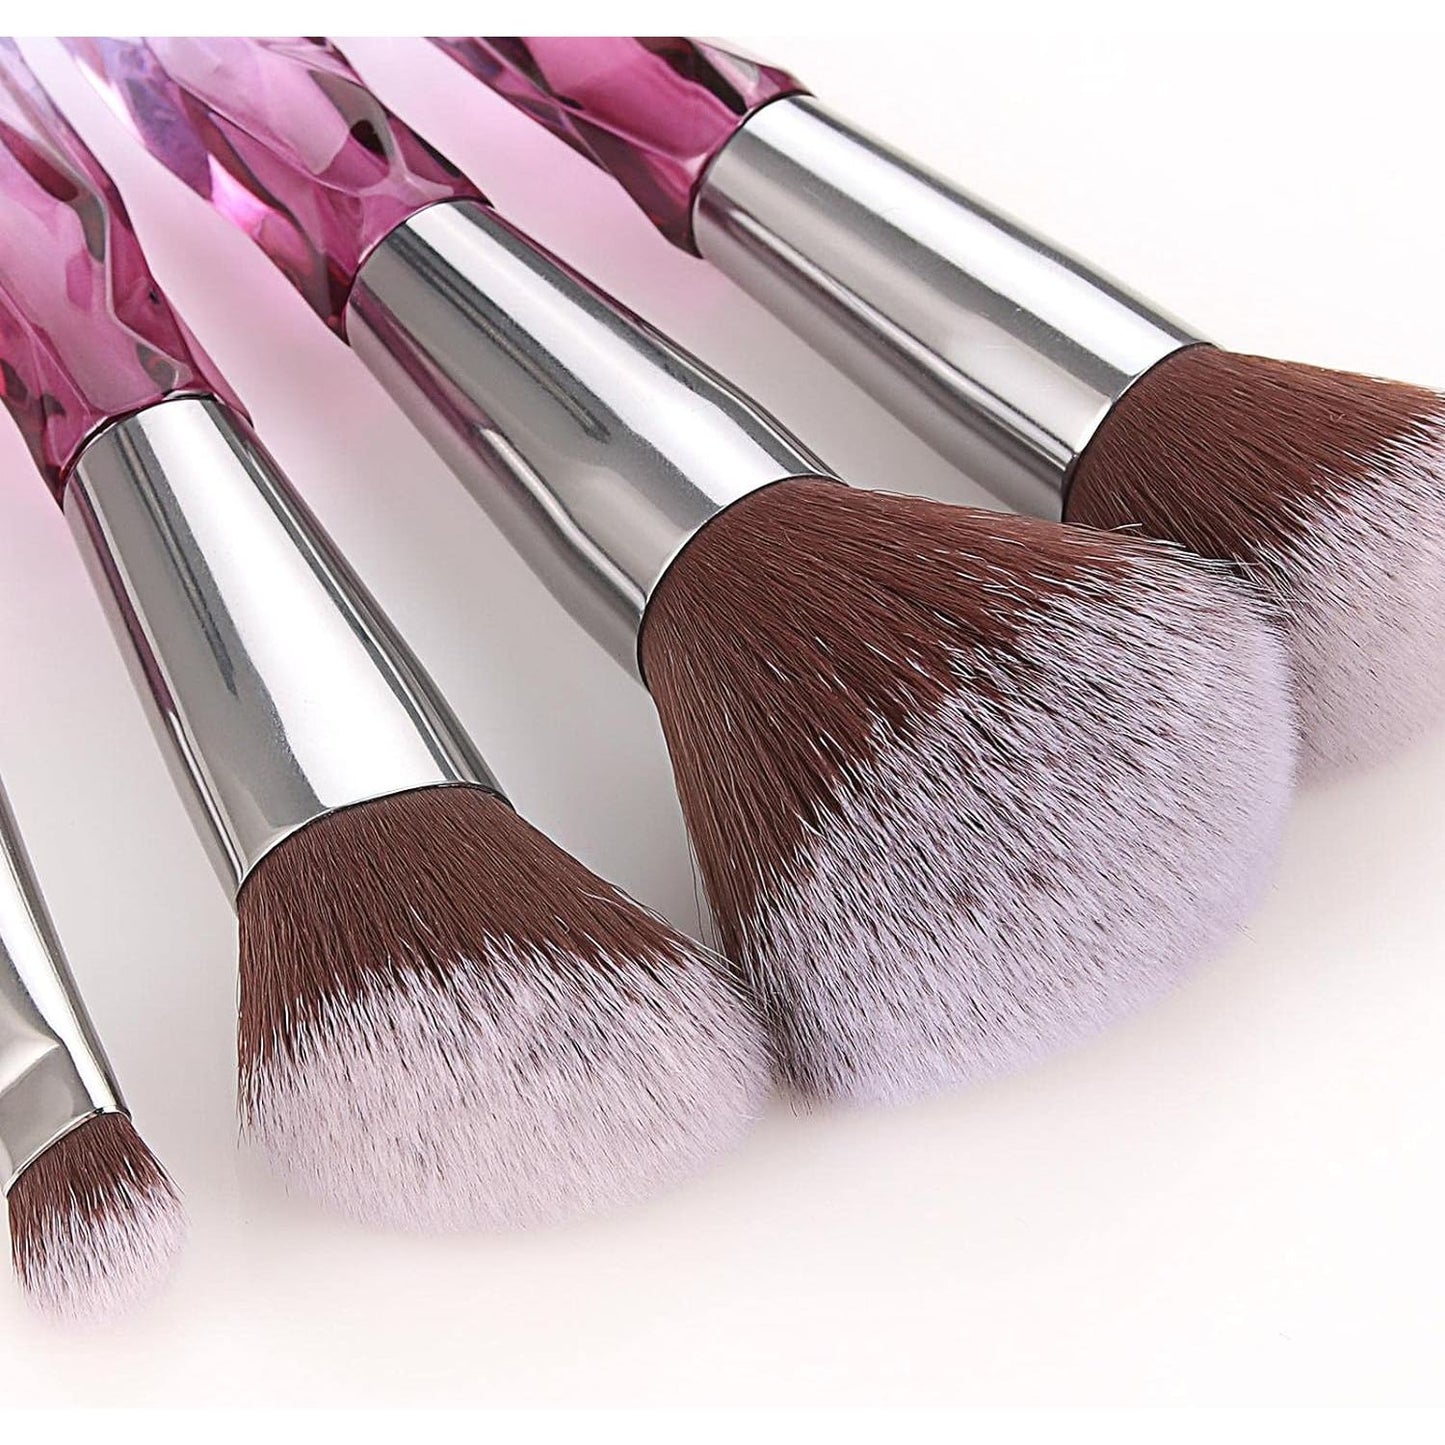 10pc Crystalline Design Makeup Brush Set